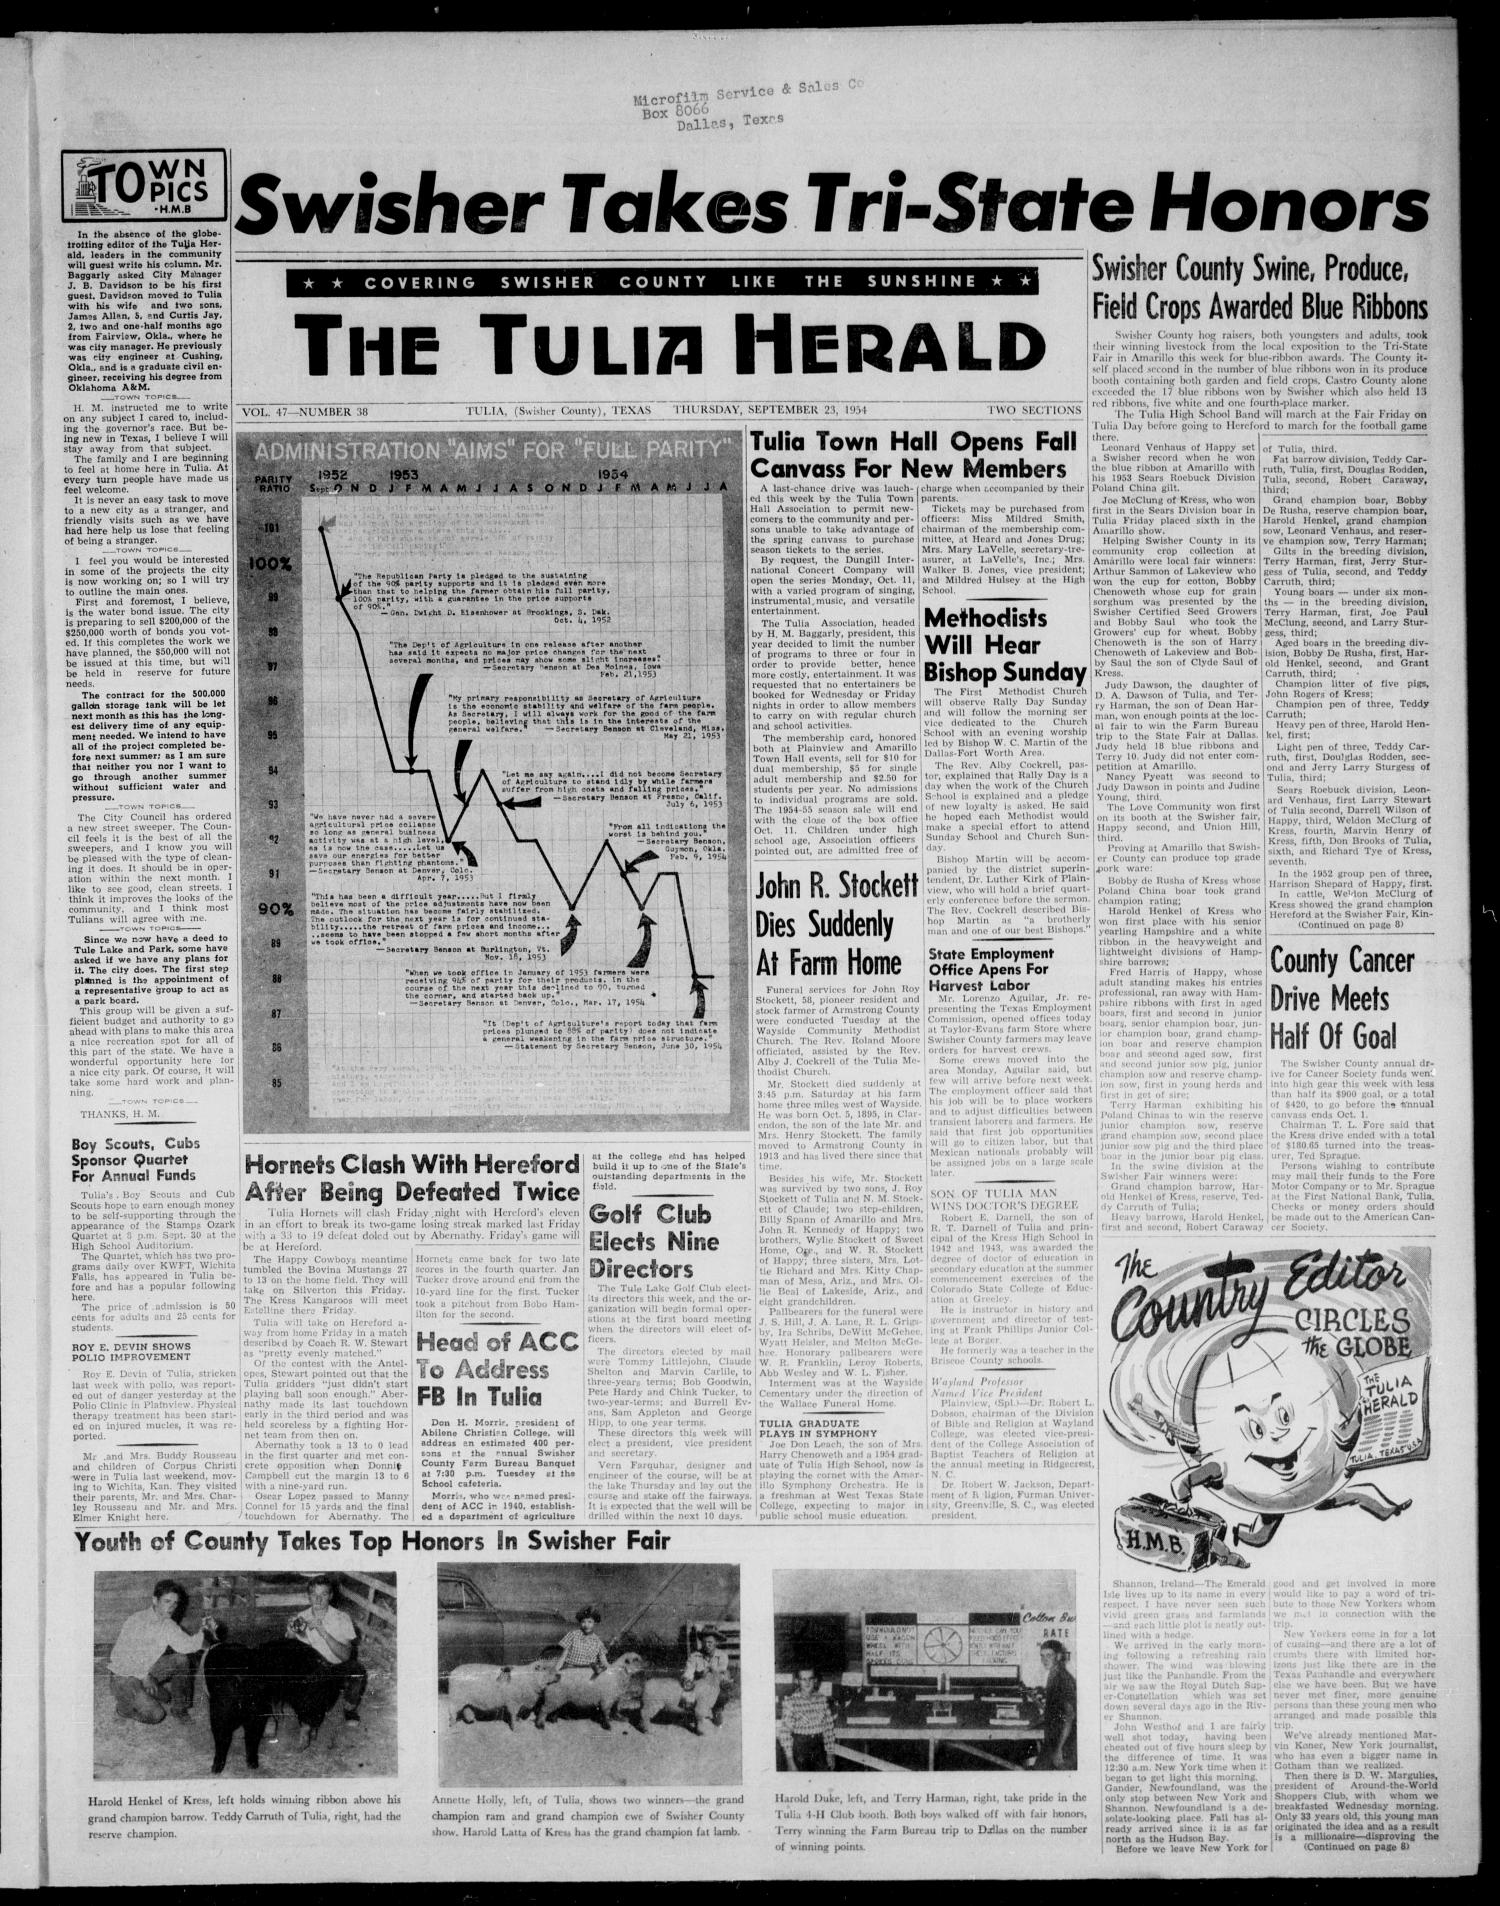 The Tulia Herald (Tulia, Tex), Vol. 47, No. 38, Ed. 1, Thursday, September 23, 1954
                                                
                                                    1
                                                